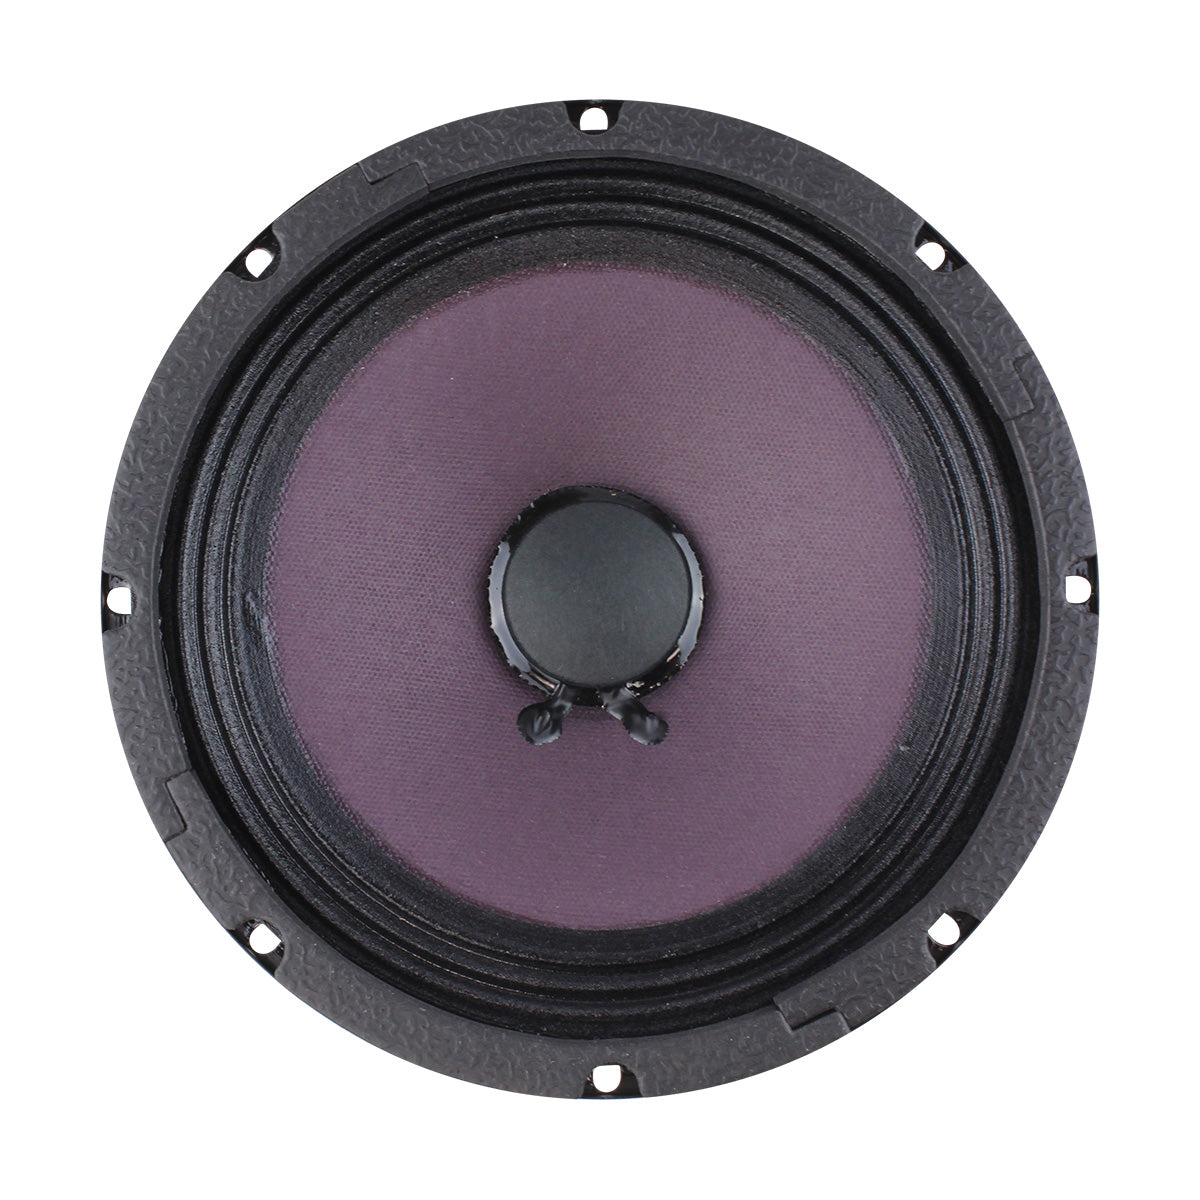 8 inch 300 Watts Midbass Loudspeaker - BLAST208